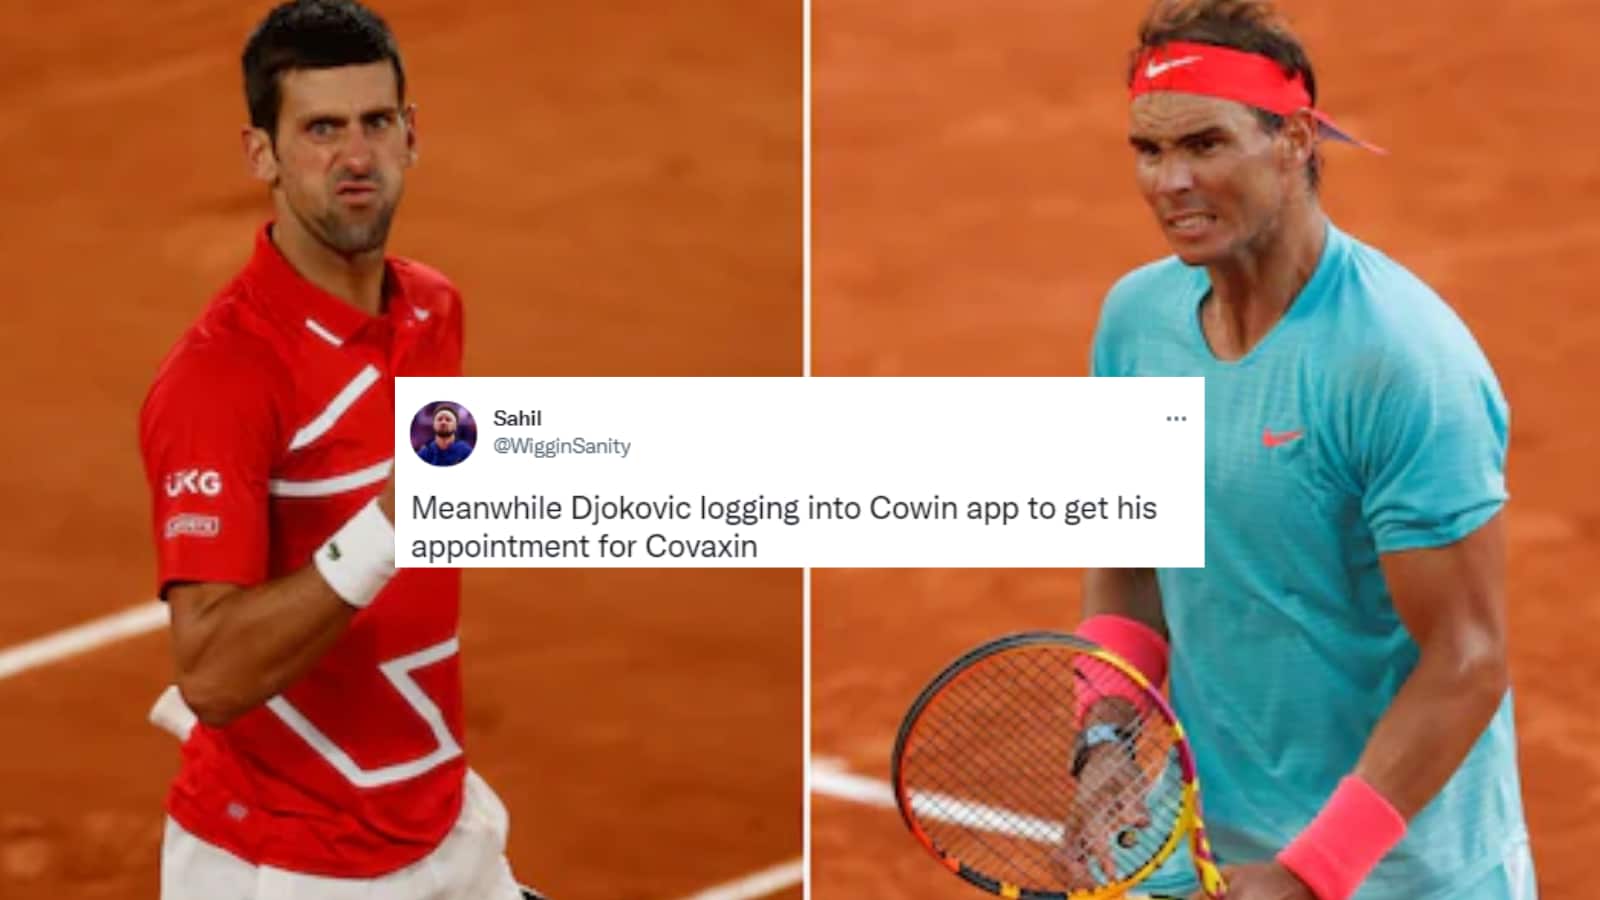 Tennis Fans Take Jabs at Unvaccinated Novak Djokovic as Rafael Nadal Wins Australian Open